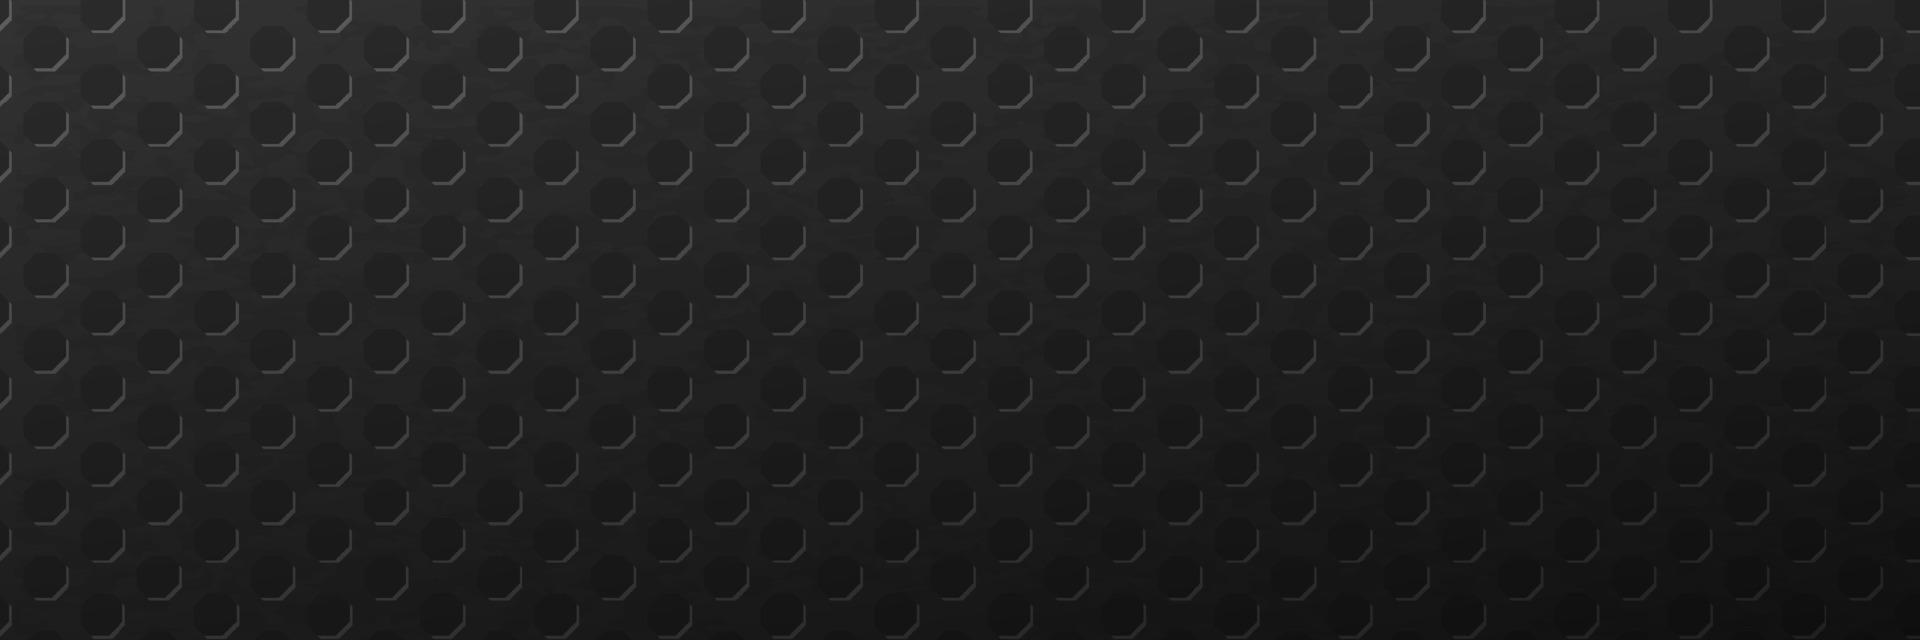 Dark hexagonal tracery background. Abstraction geometric polygonal grid textured in dark brutal monochrome vector linear minimalism